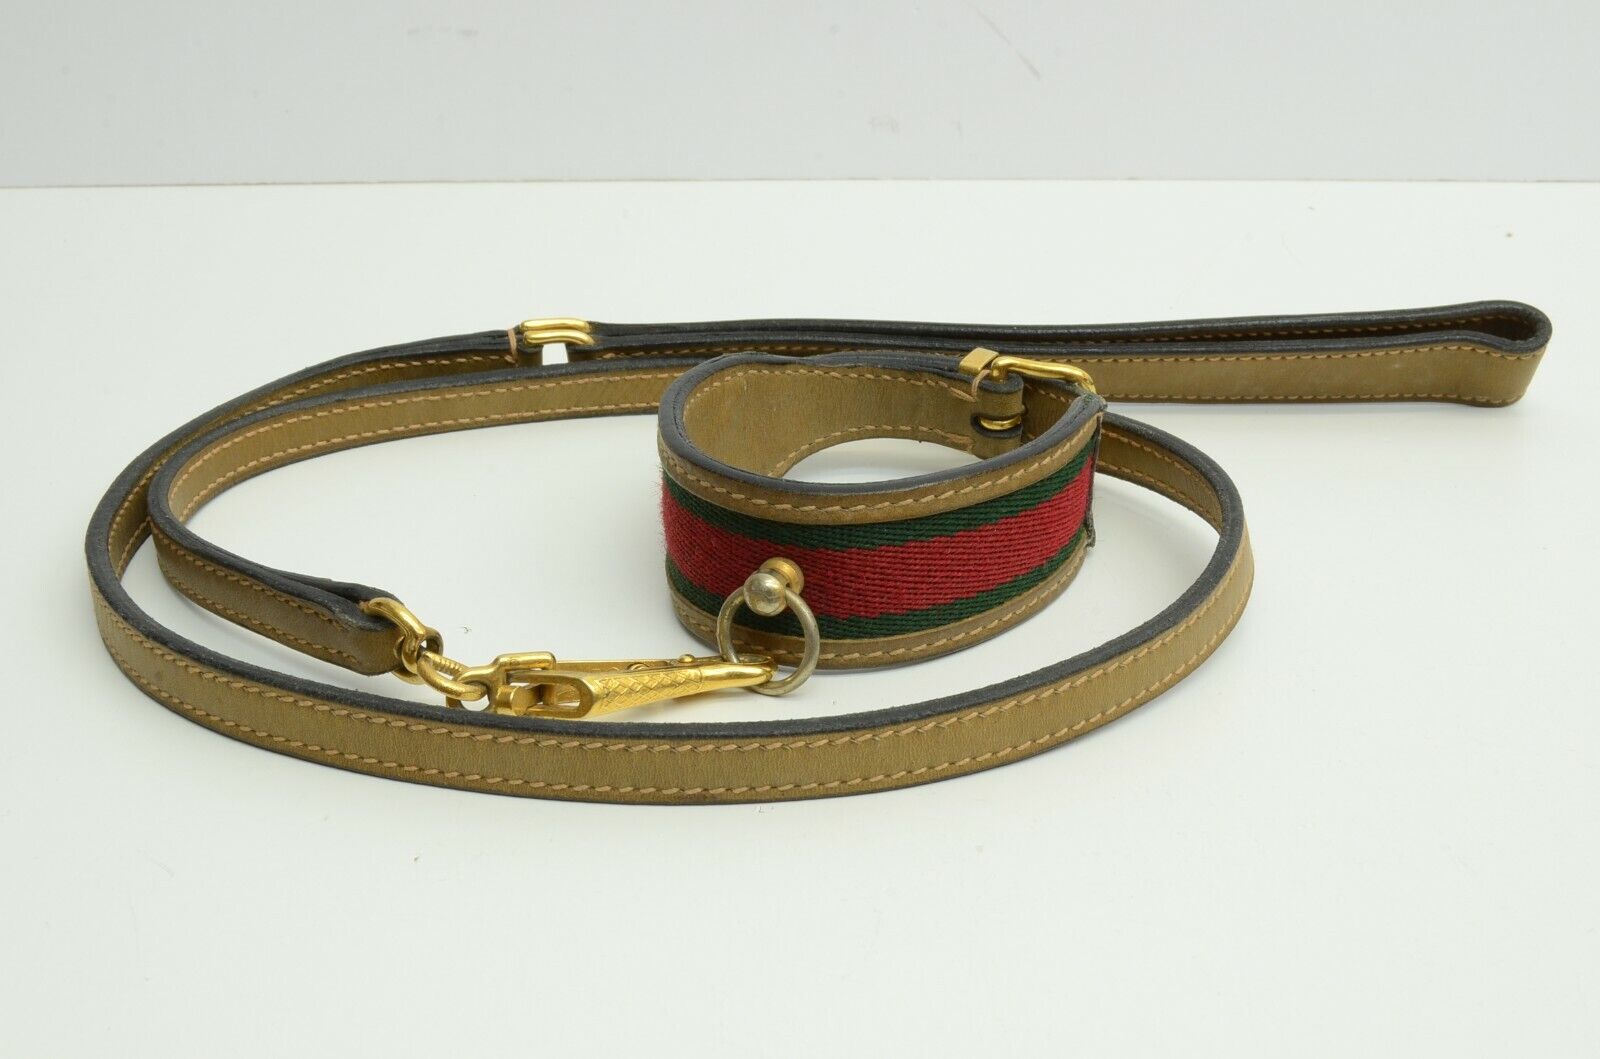 Authentic Gucci Web Stripe Dog Leash and Collar Leather Nylon Vintage Classic